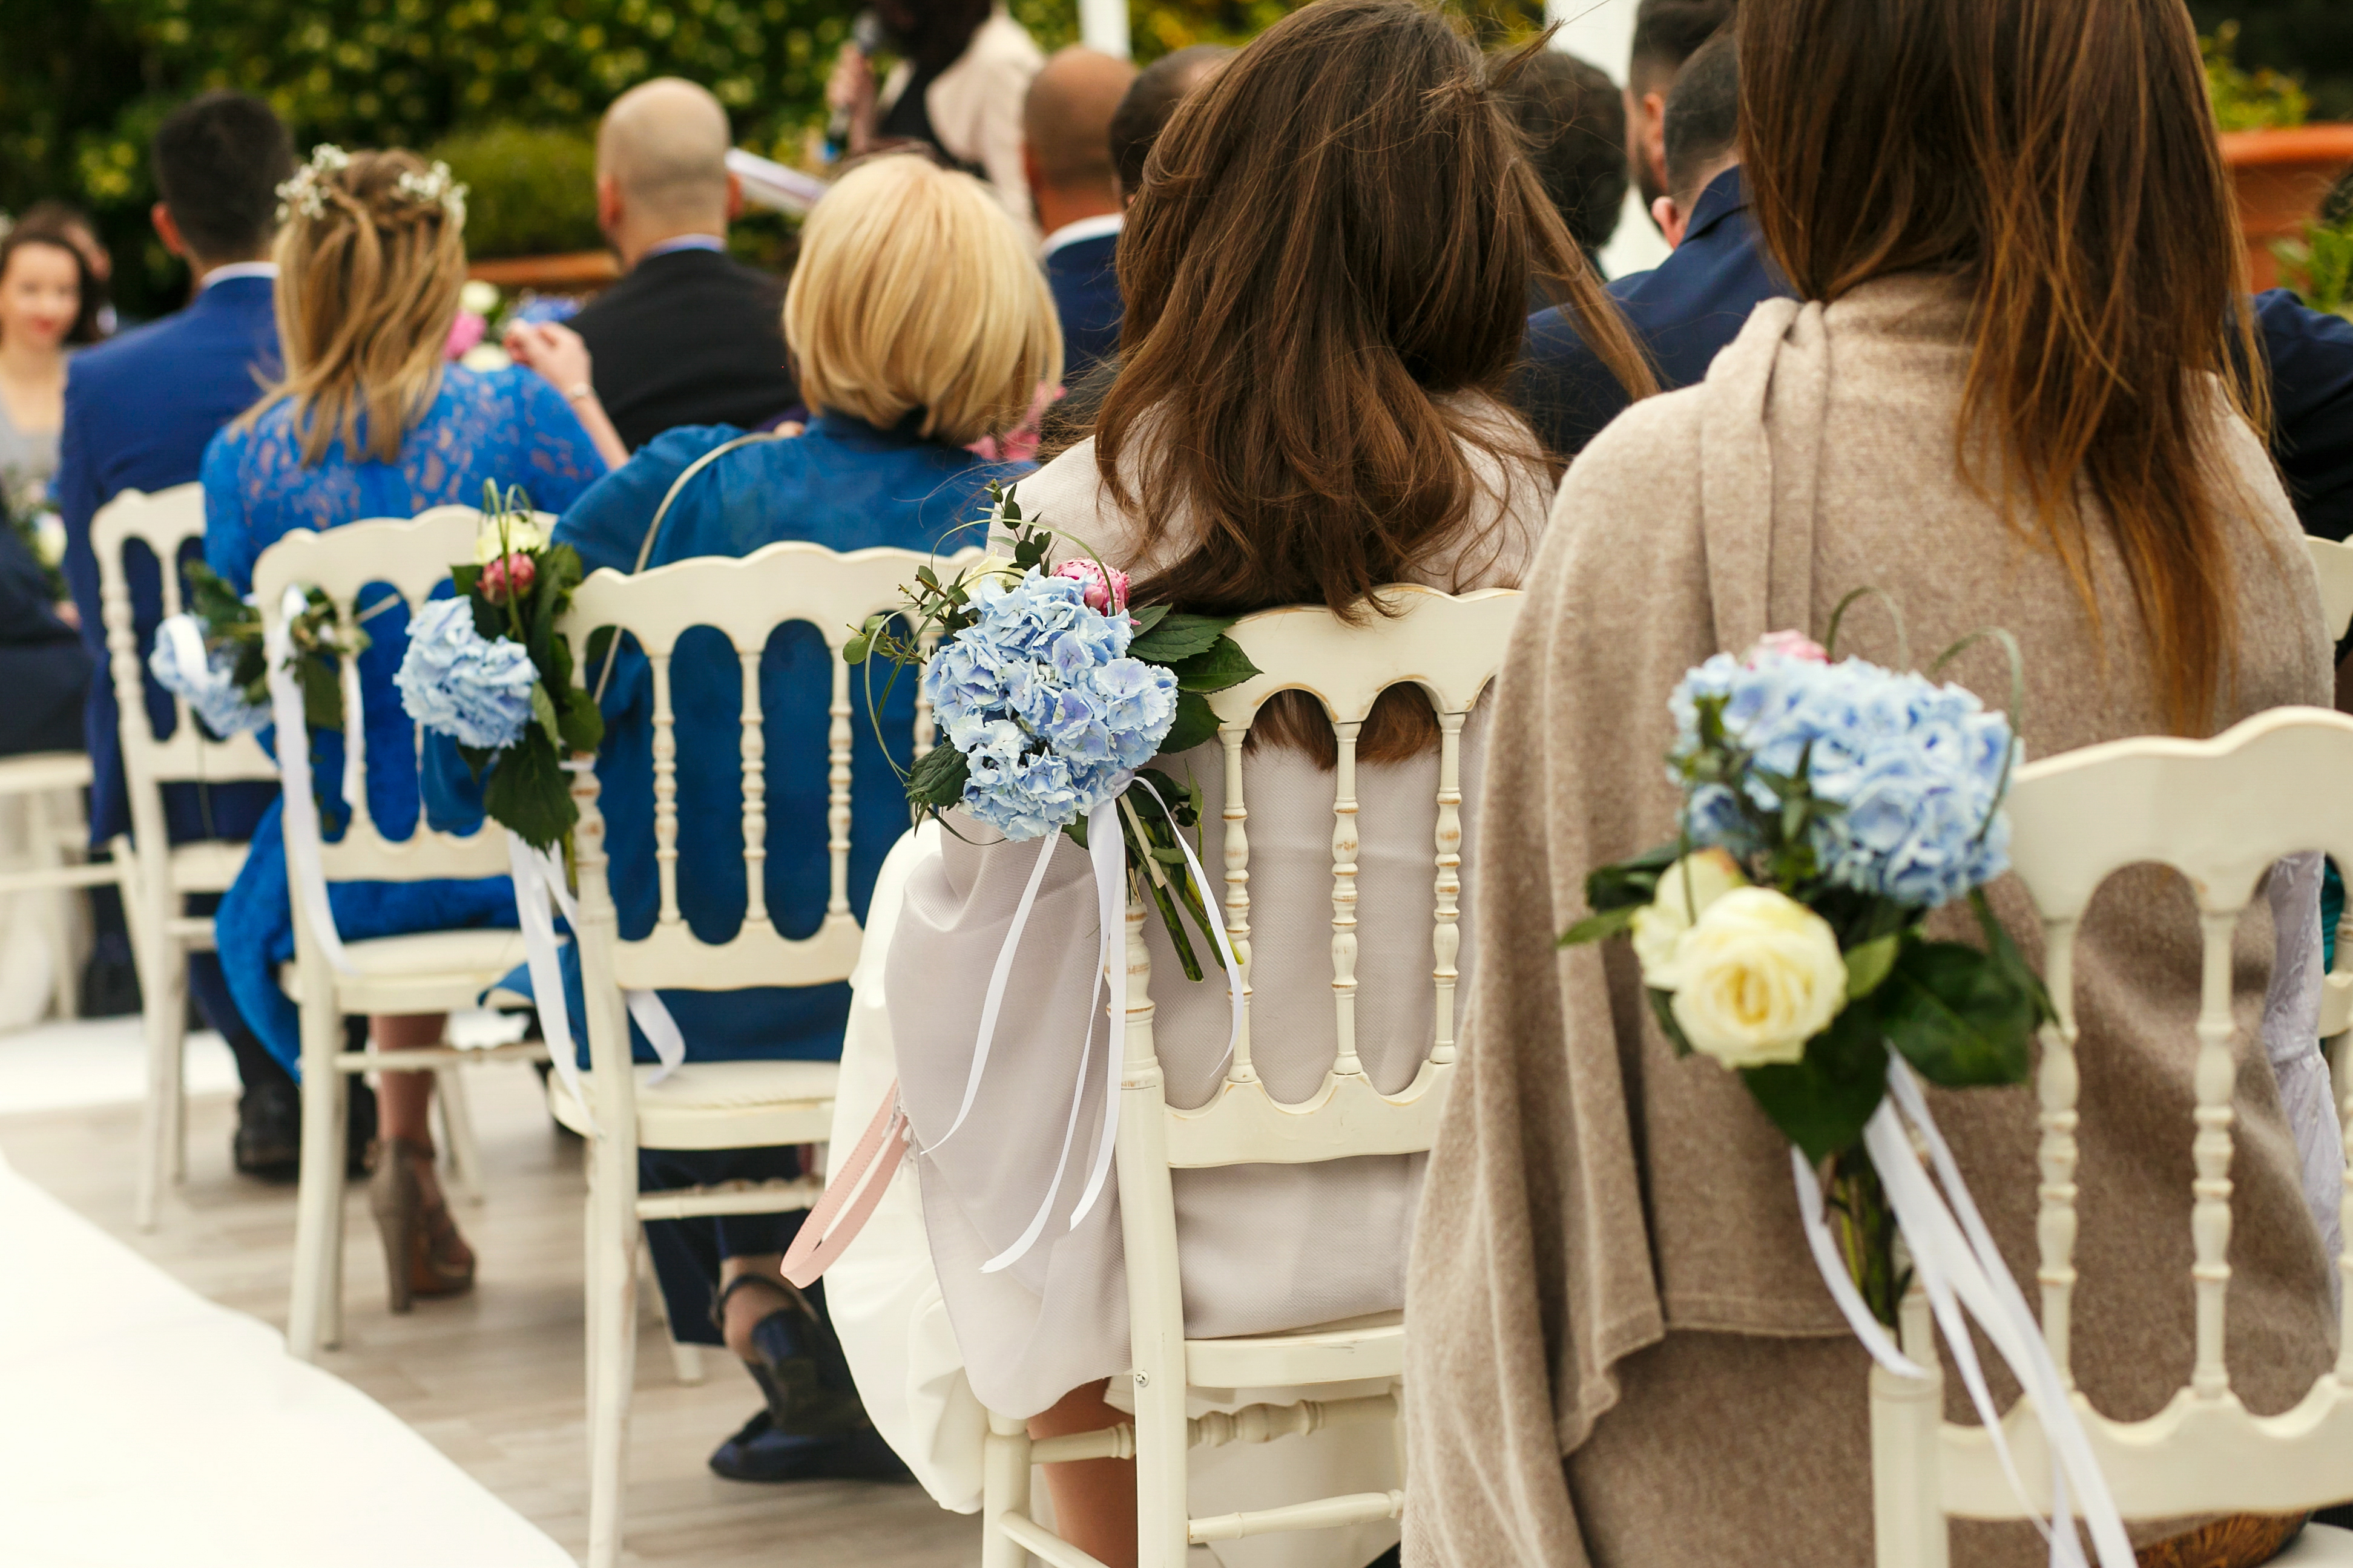 Invitados a una boda | Fuente: Shutterstock